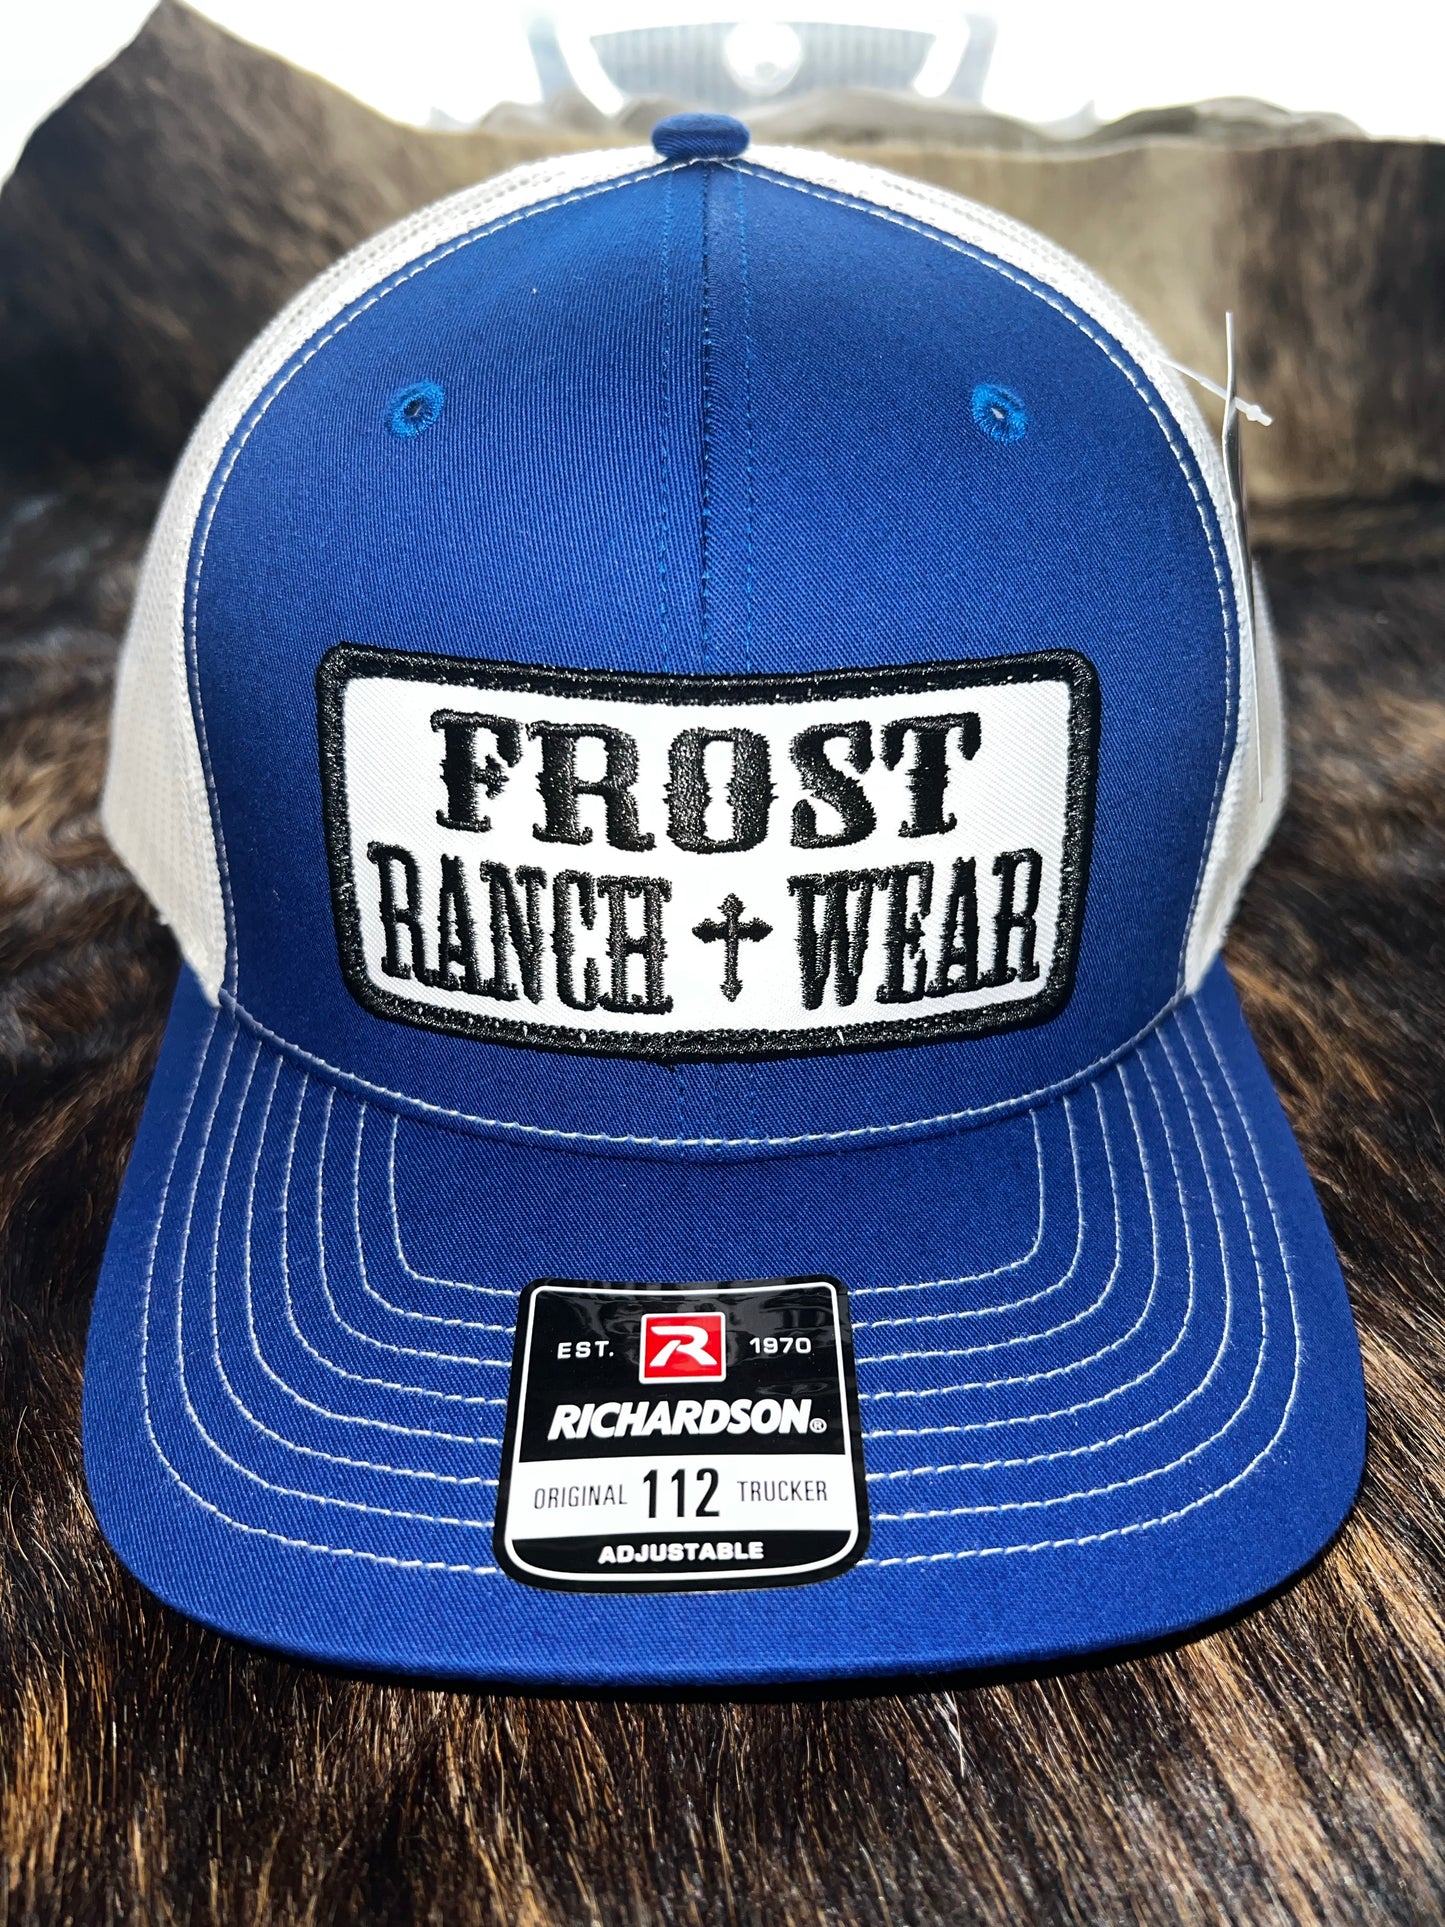 Frost Ranch Wear Patch Caps